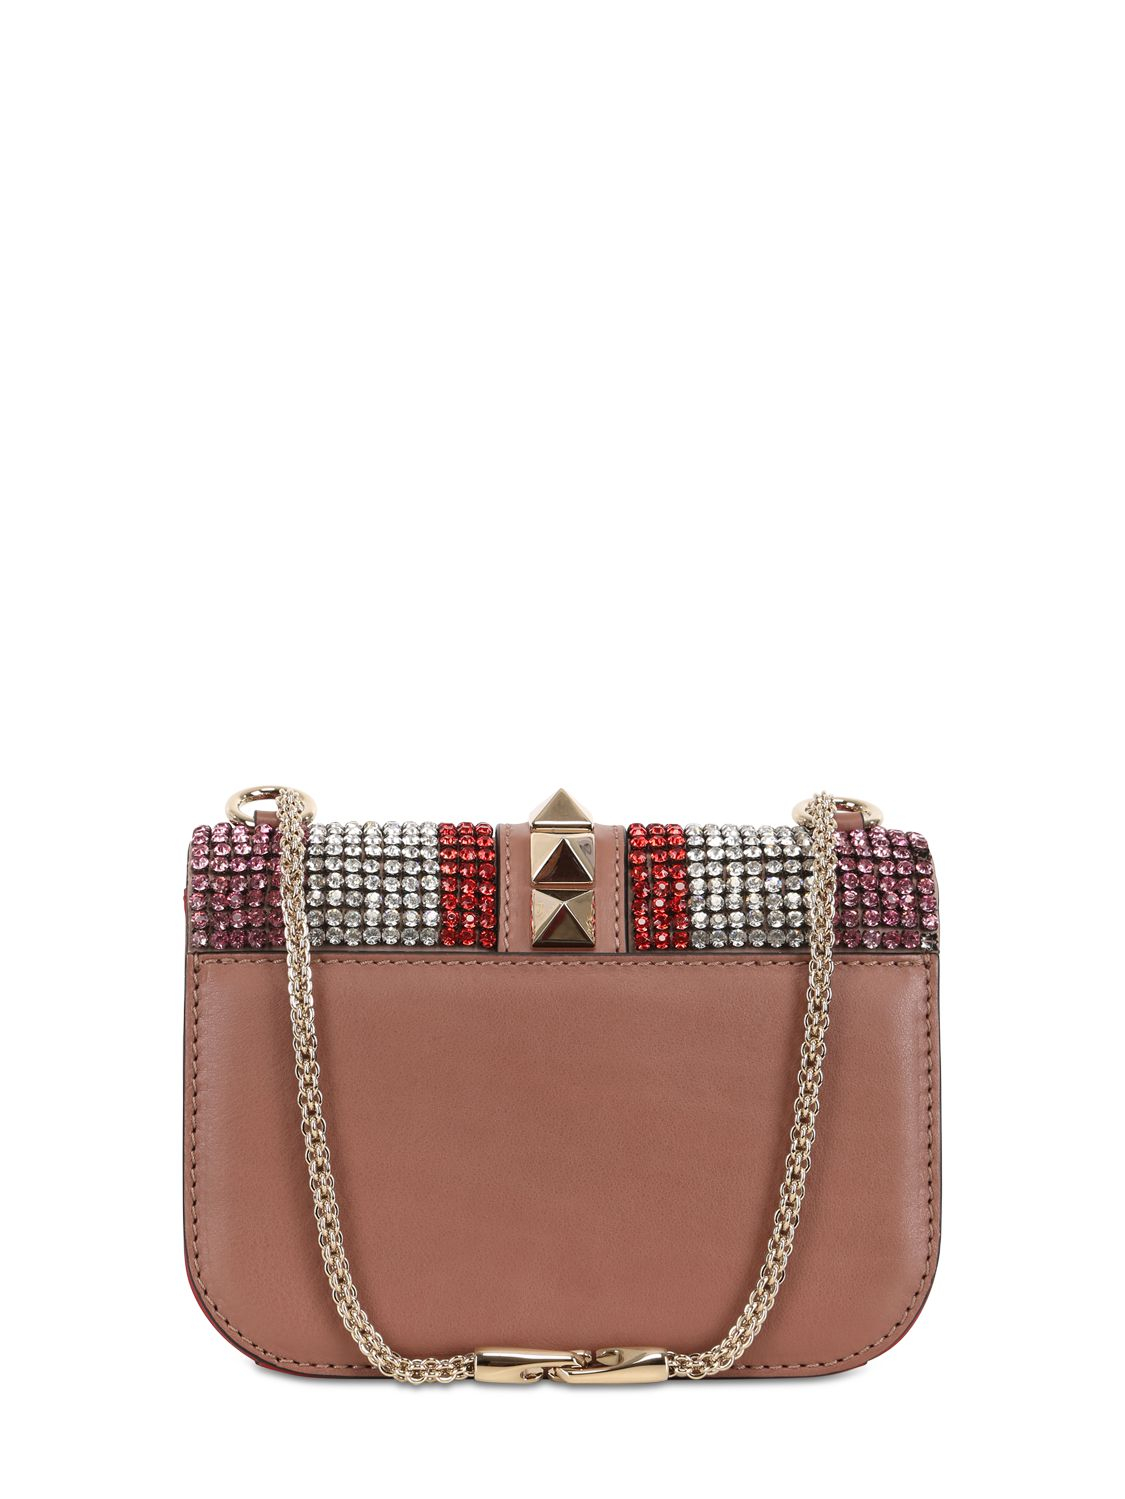 Lyst - Valentino Small Lock Multicolor Rhinestone Bag in Pink